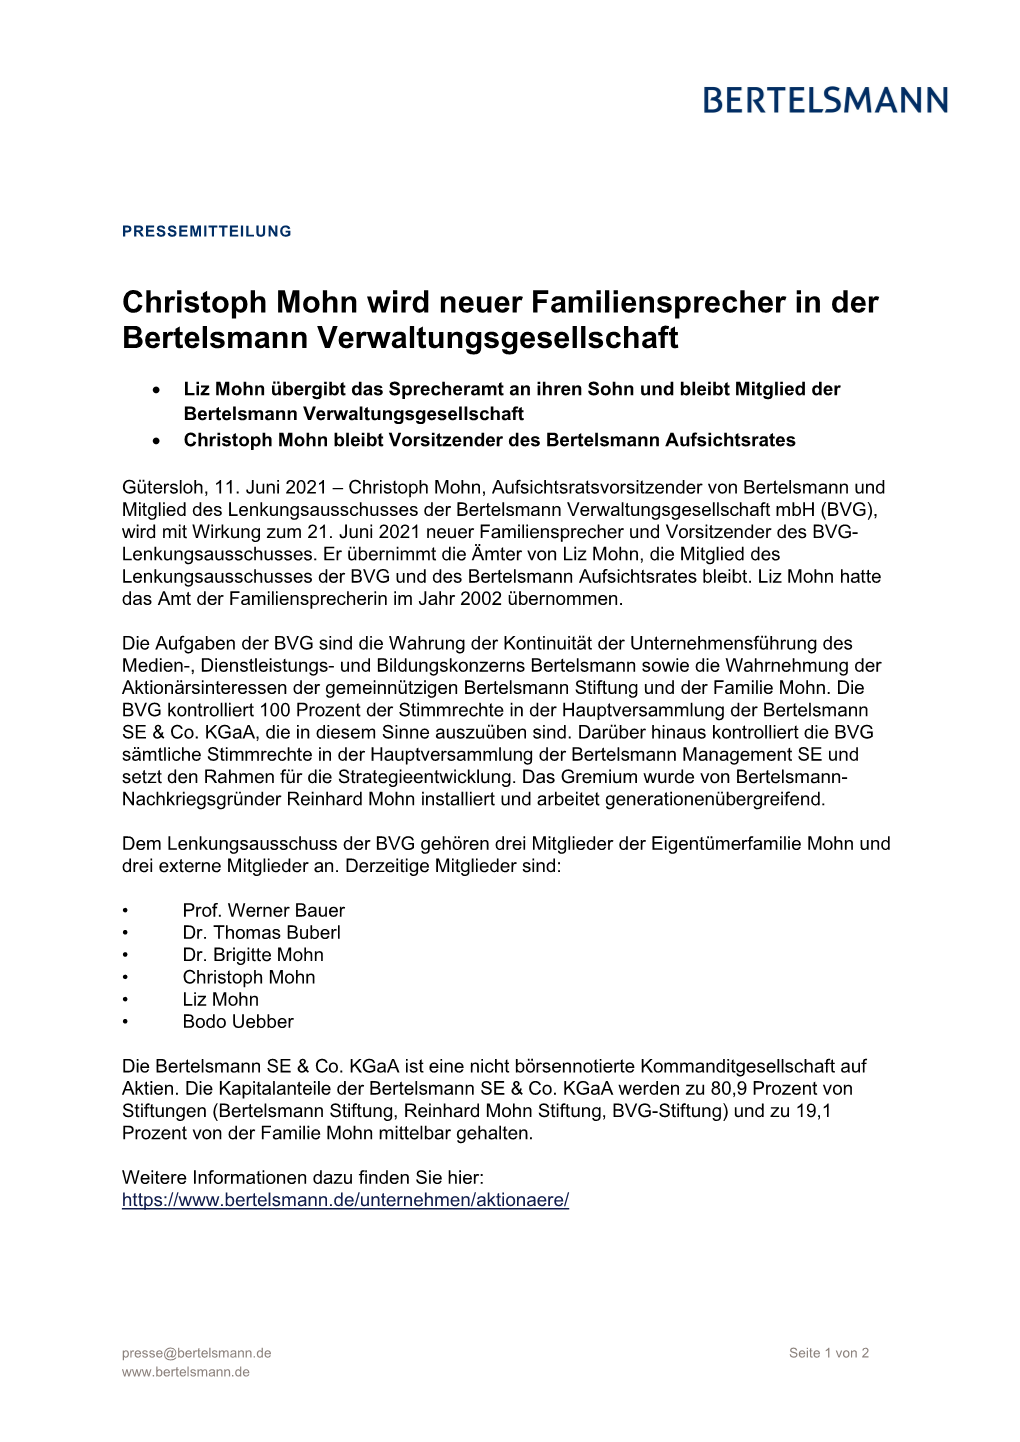 Christoph Mohn Wird Neuer Familiensprecher in Der Bertelsmann Verwaltungsgesellschaft